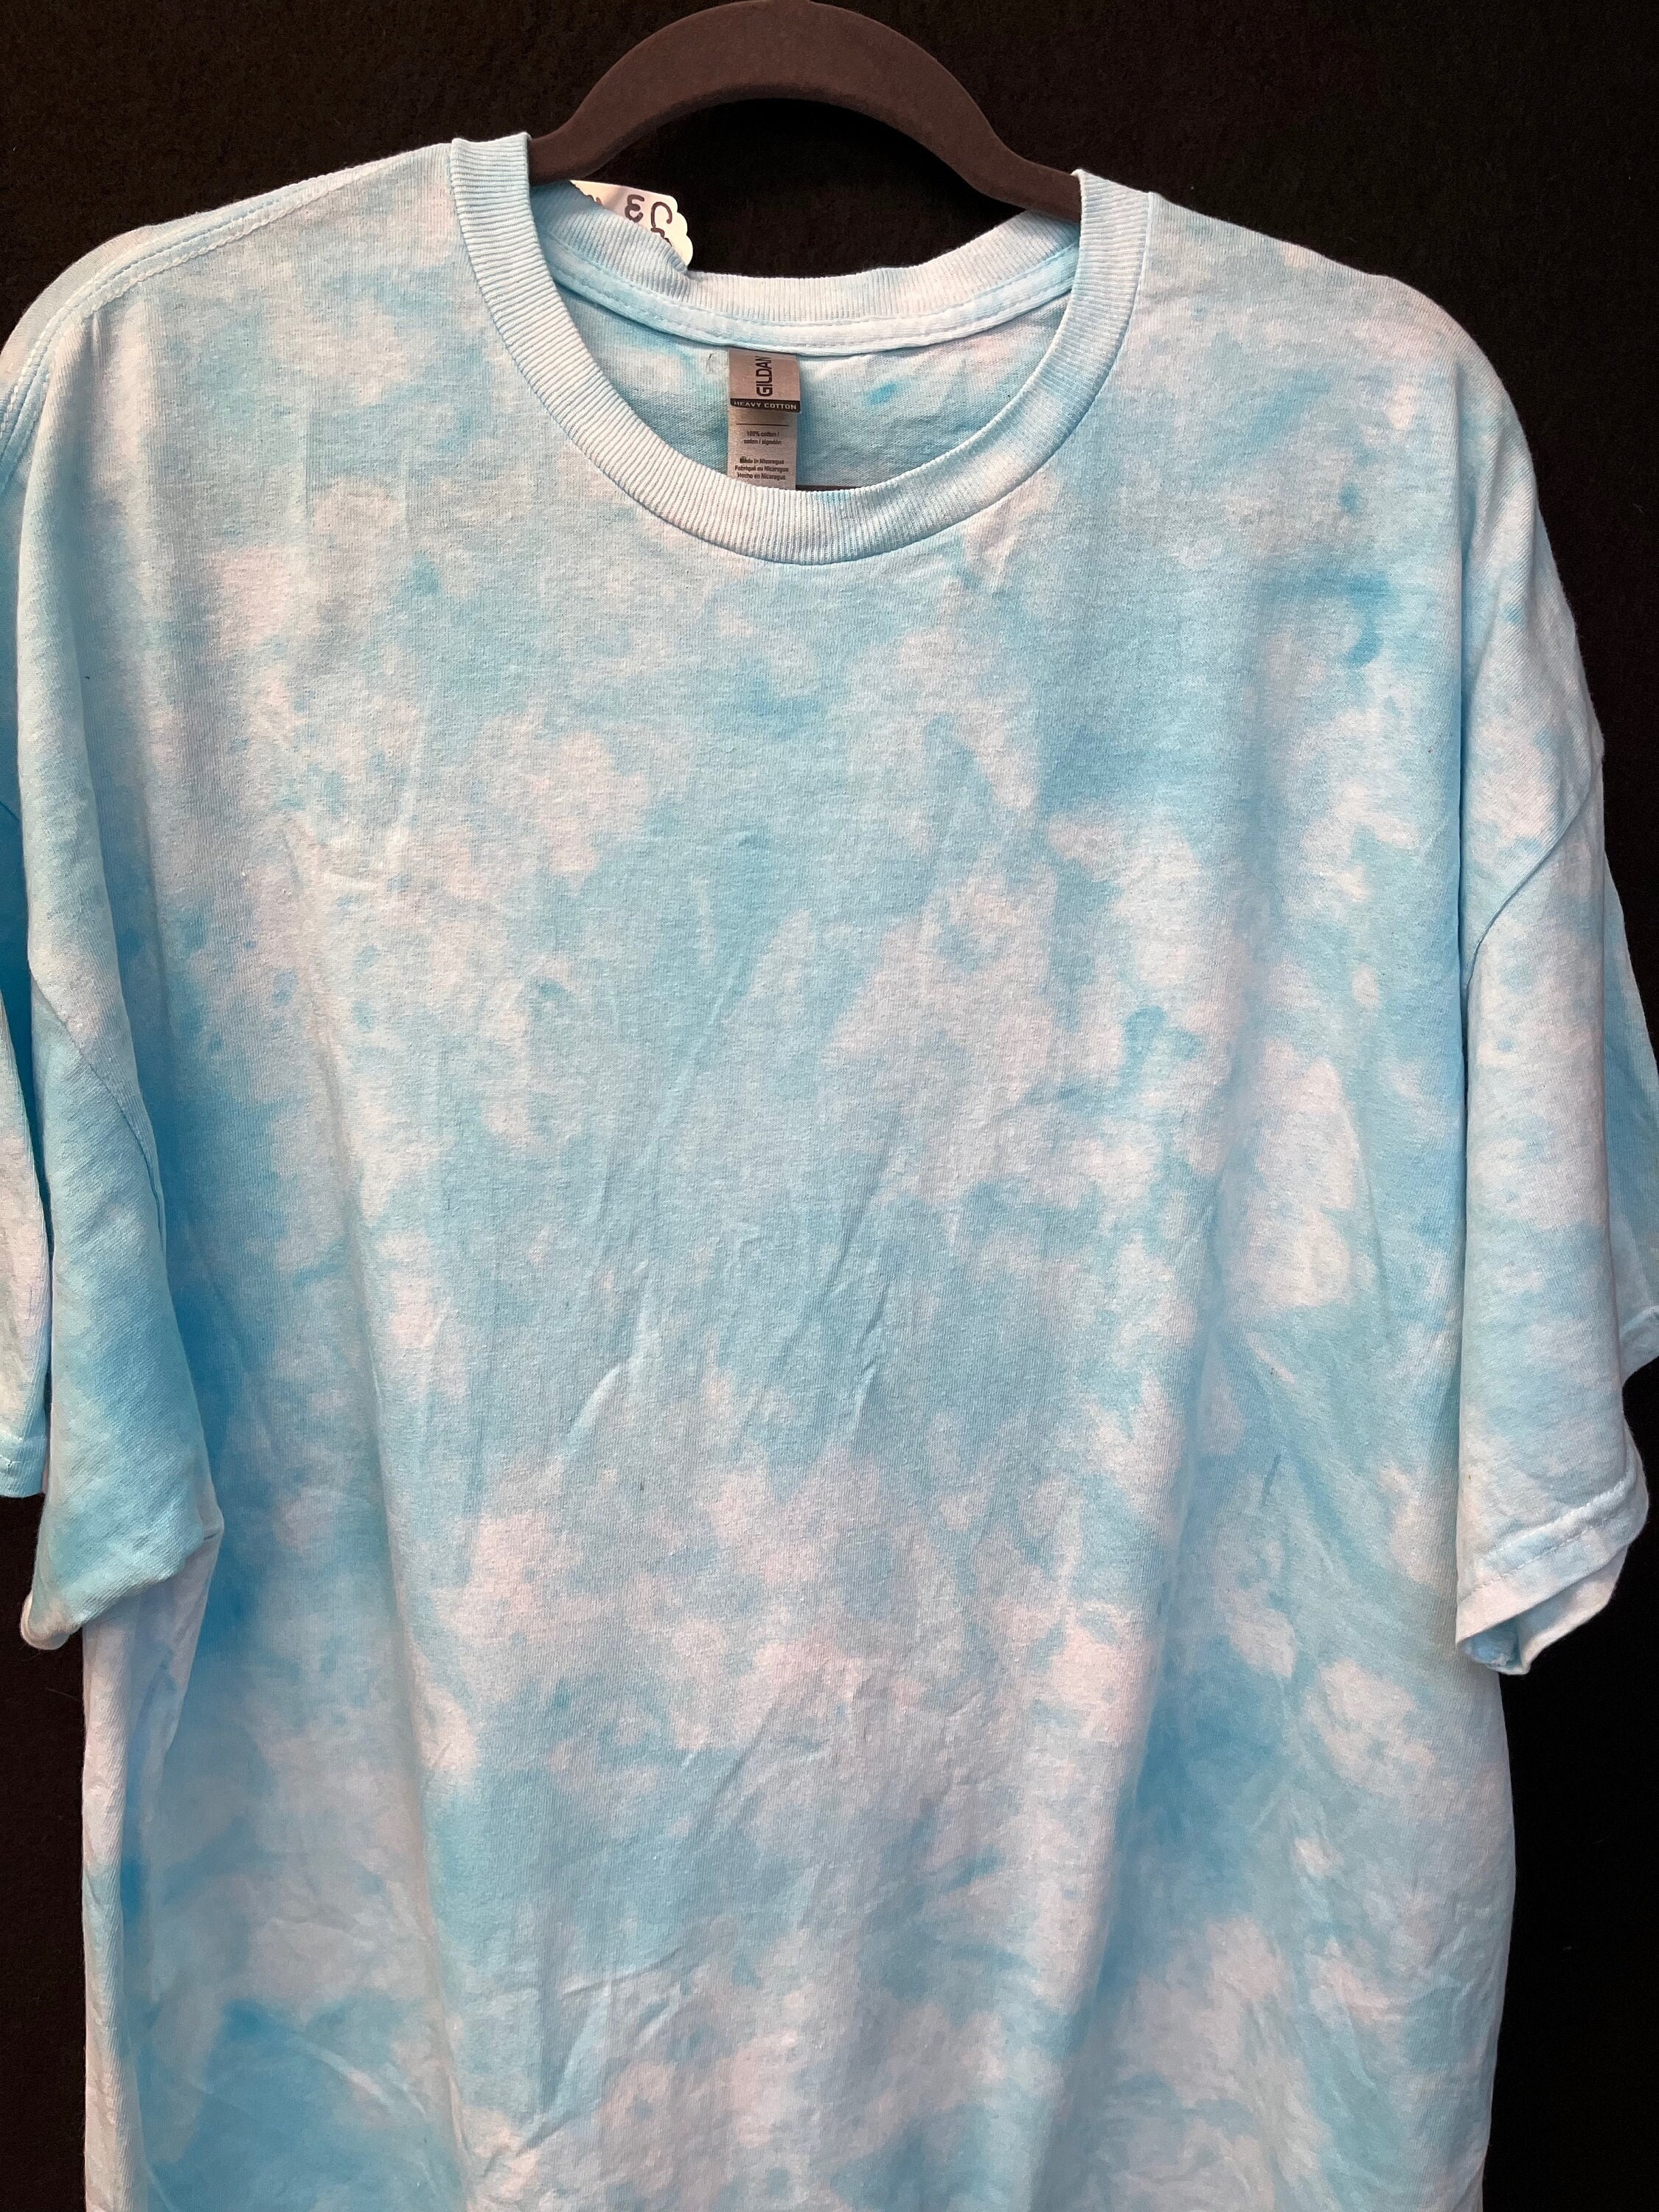 Cloud x Black Tie Dye Short Sleeve T-Shirt (9 Color Options) – The Tie Dye  Company